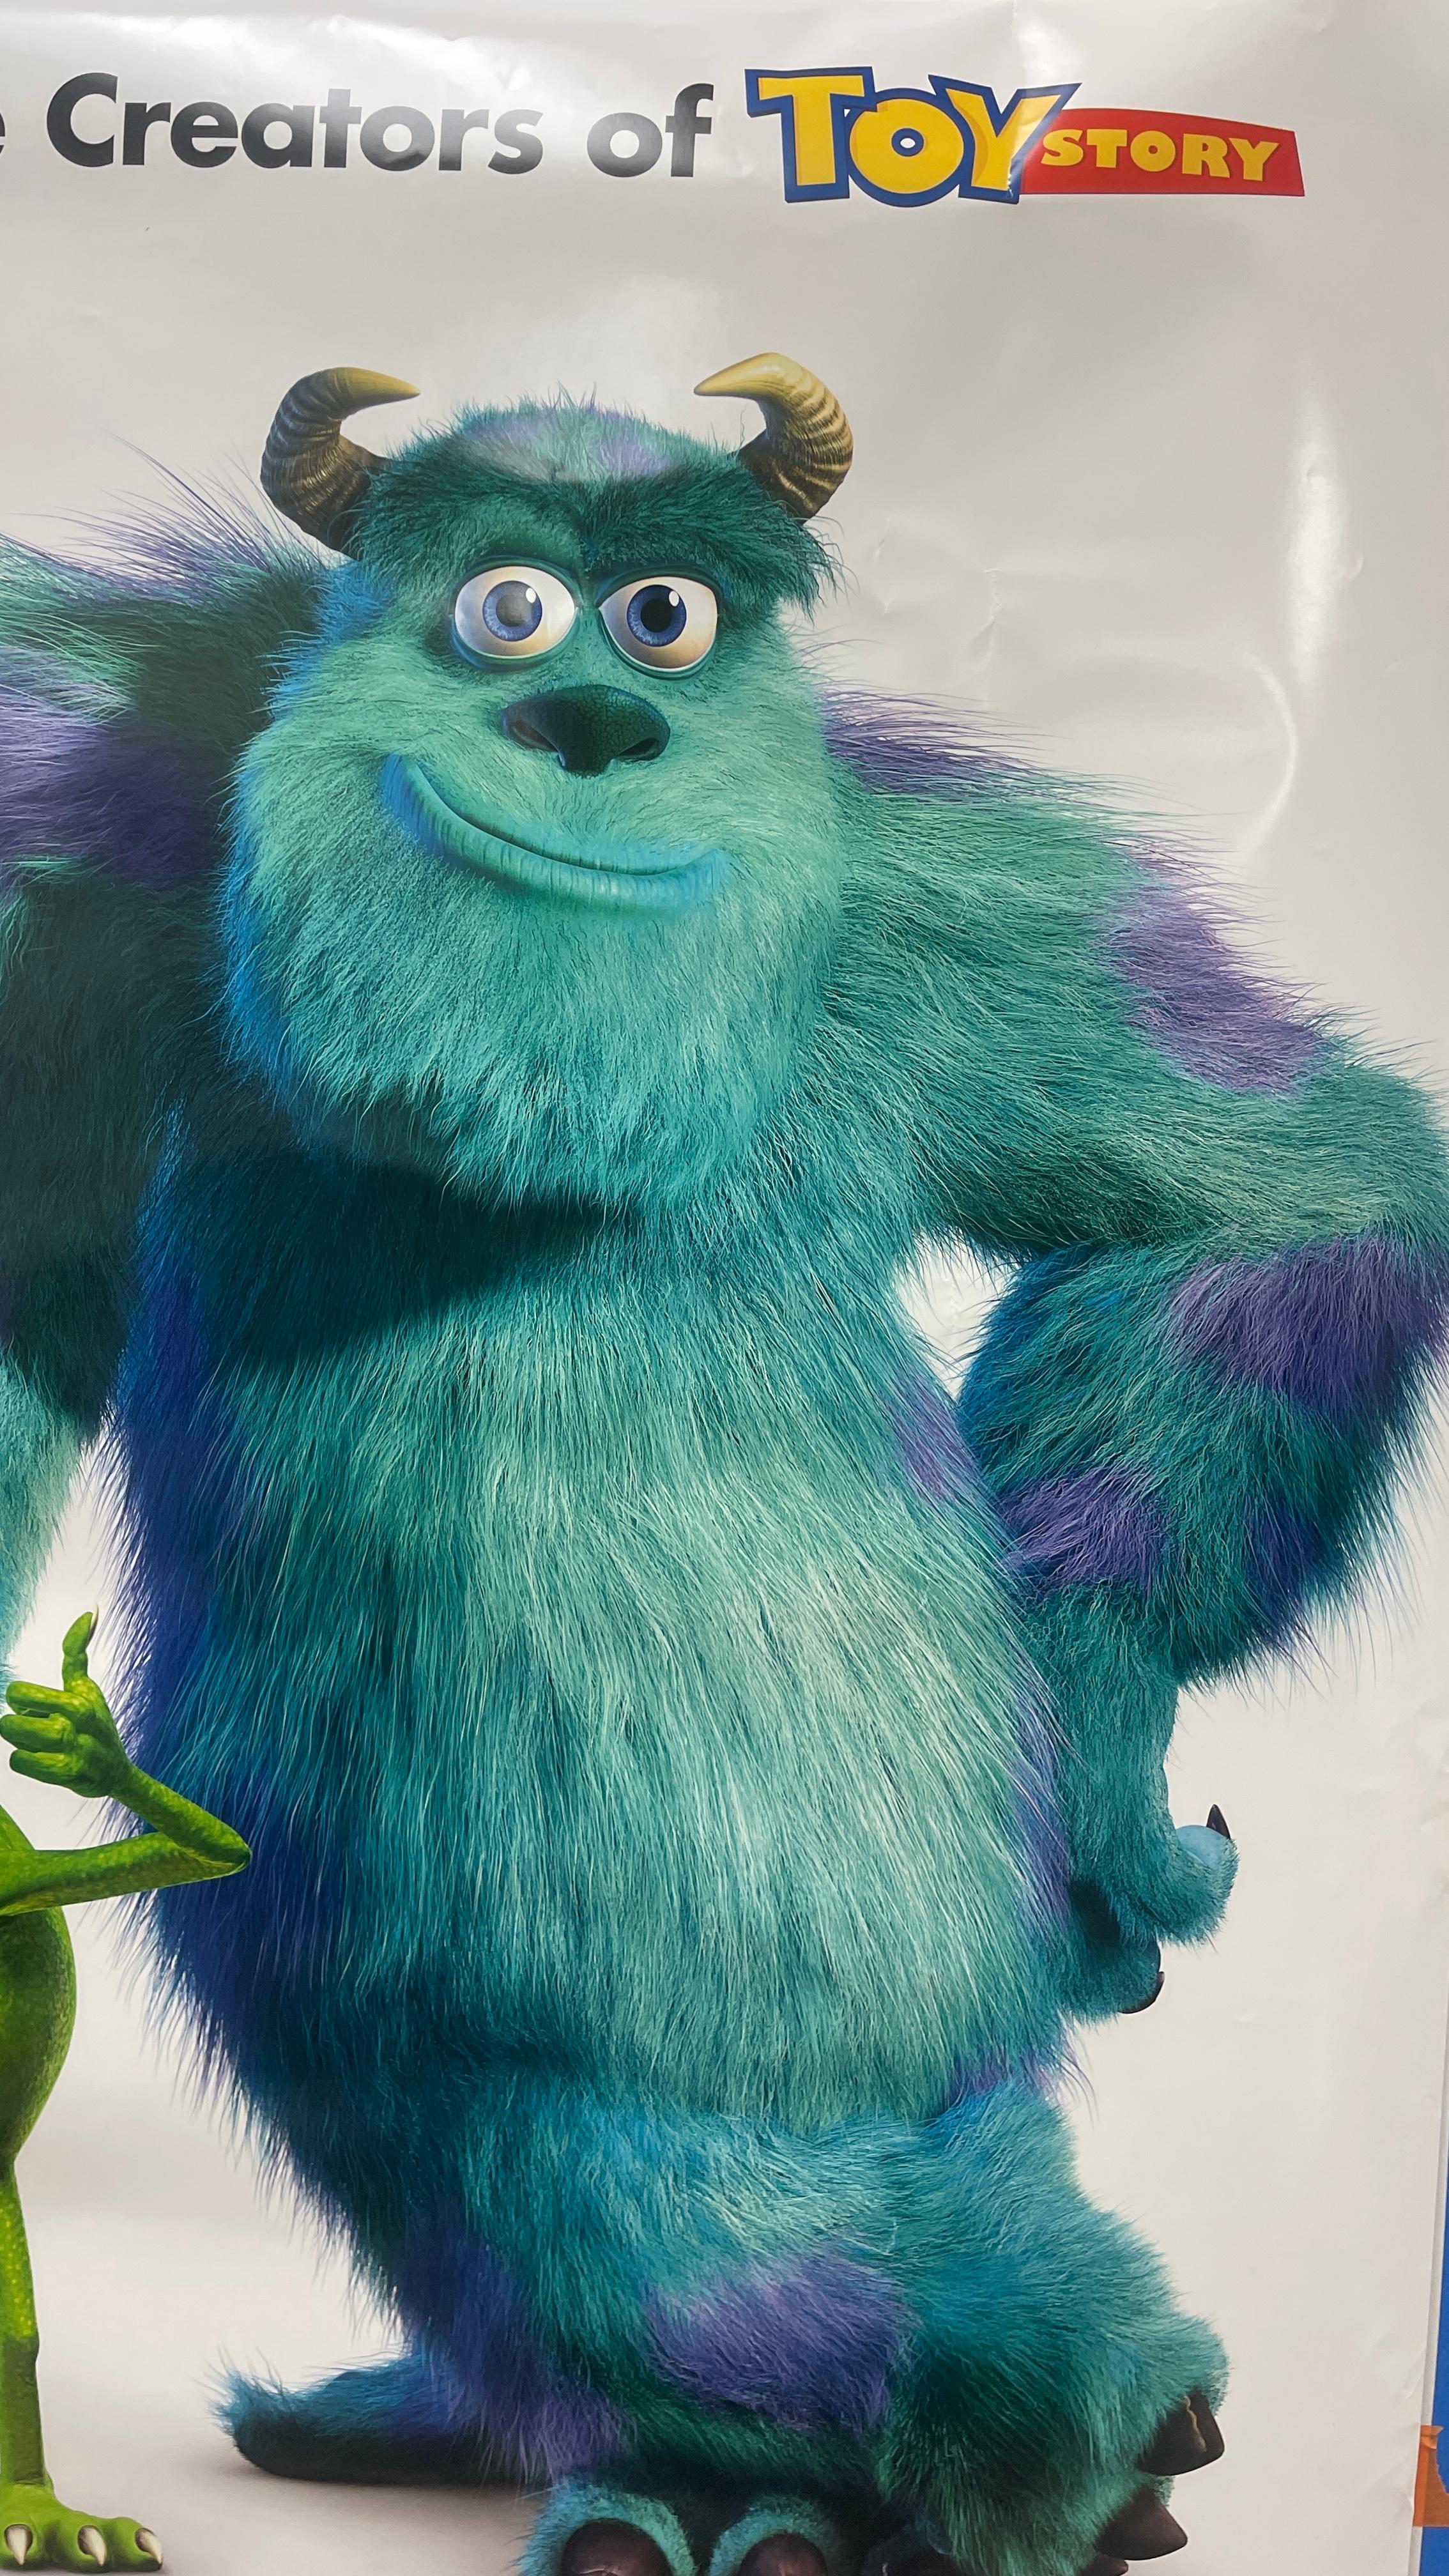 Monsters Inc. Original Movie Theatre Poster Disney Pixar 2 sided Original 27x40